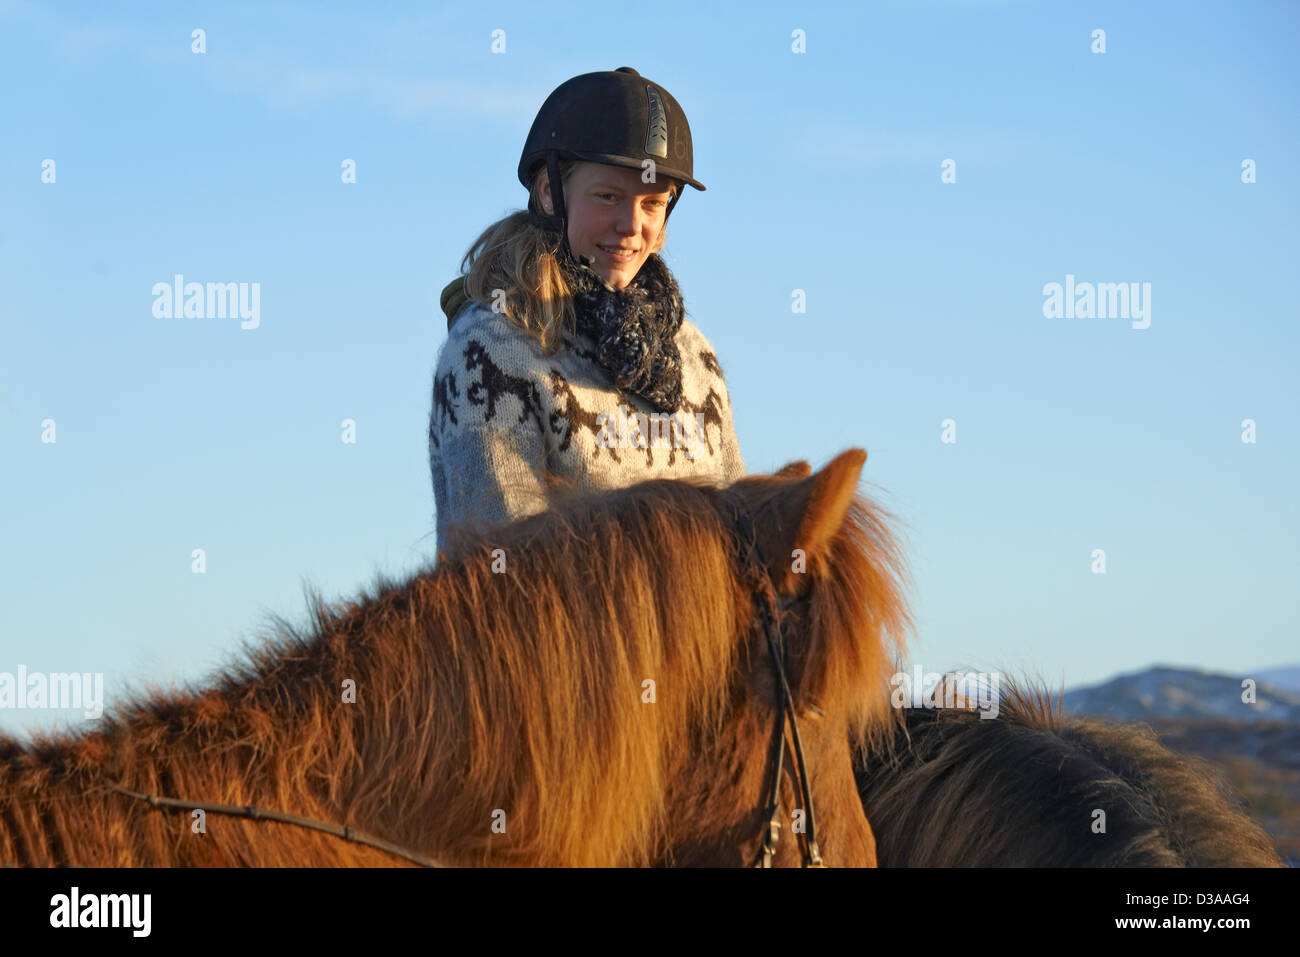 Woman riding horse outdoors Stock Photo